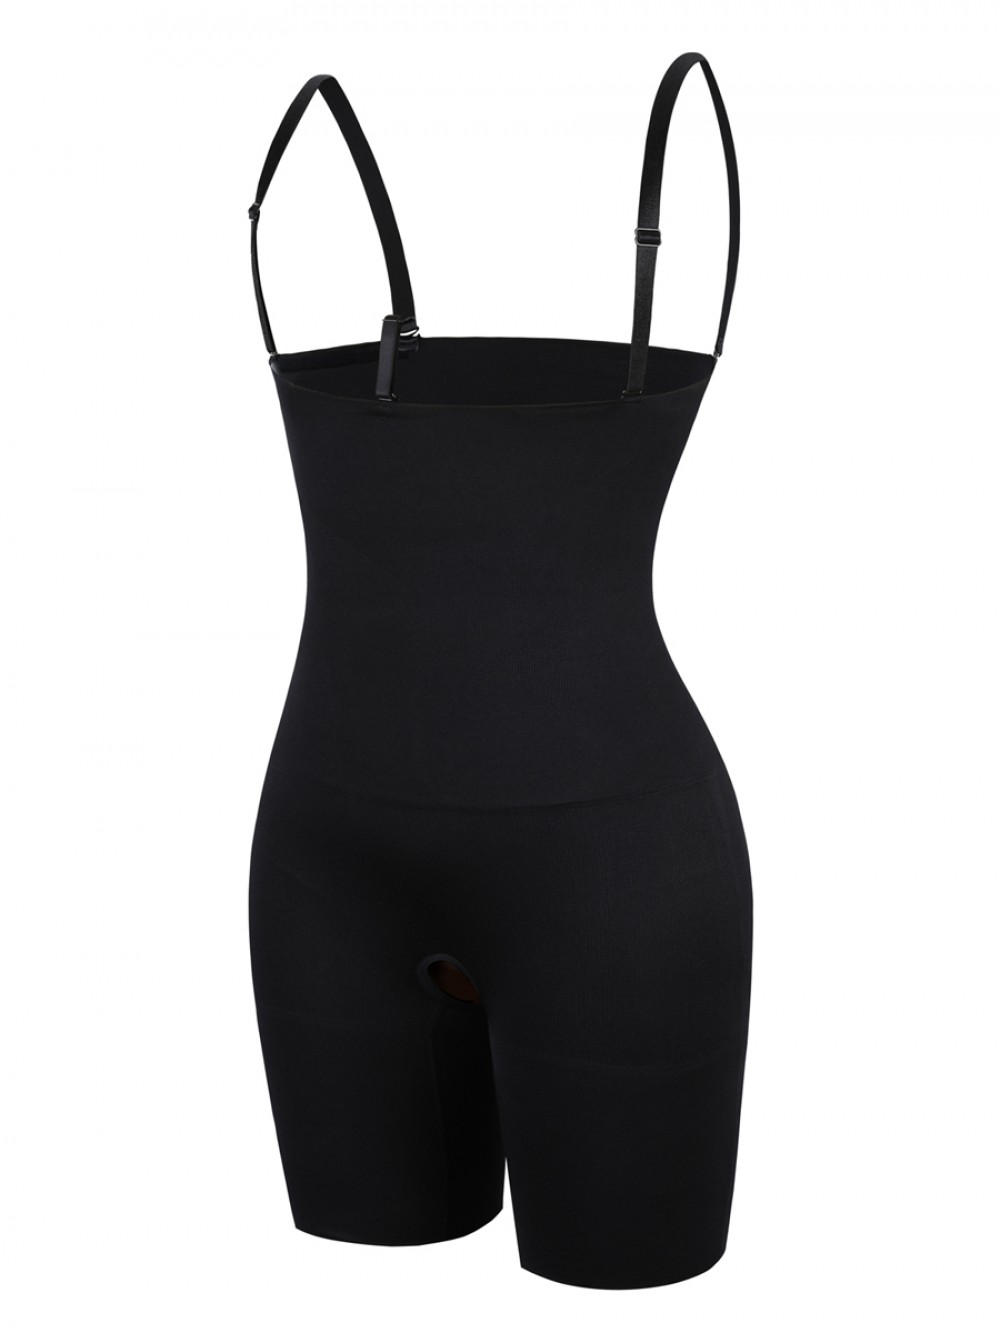 Black Seamless Shapewear Shorts Adjustable Straps Soft-Touch